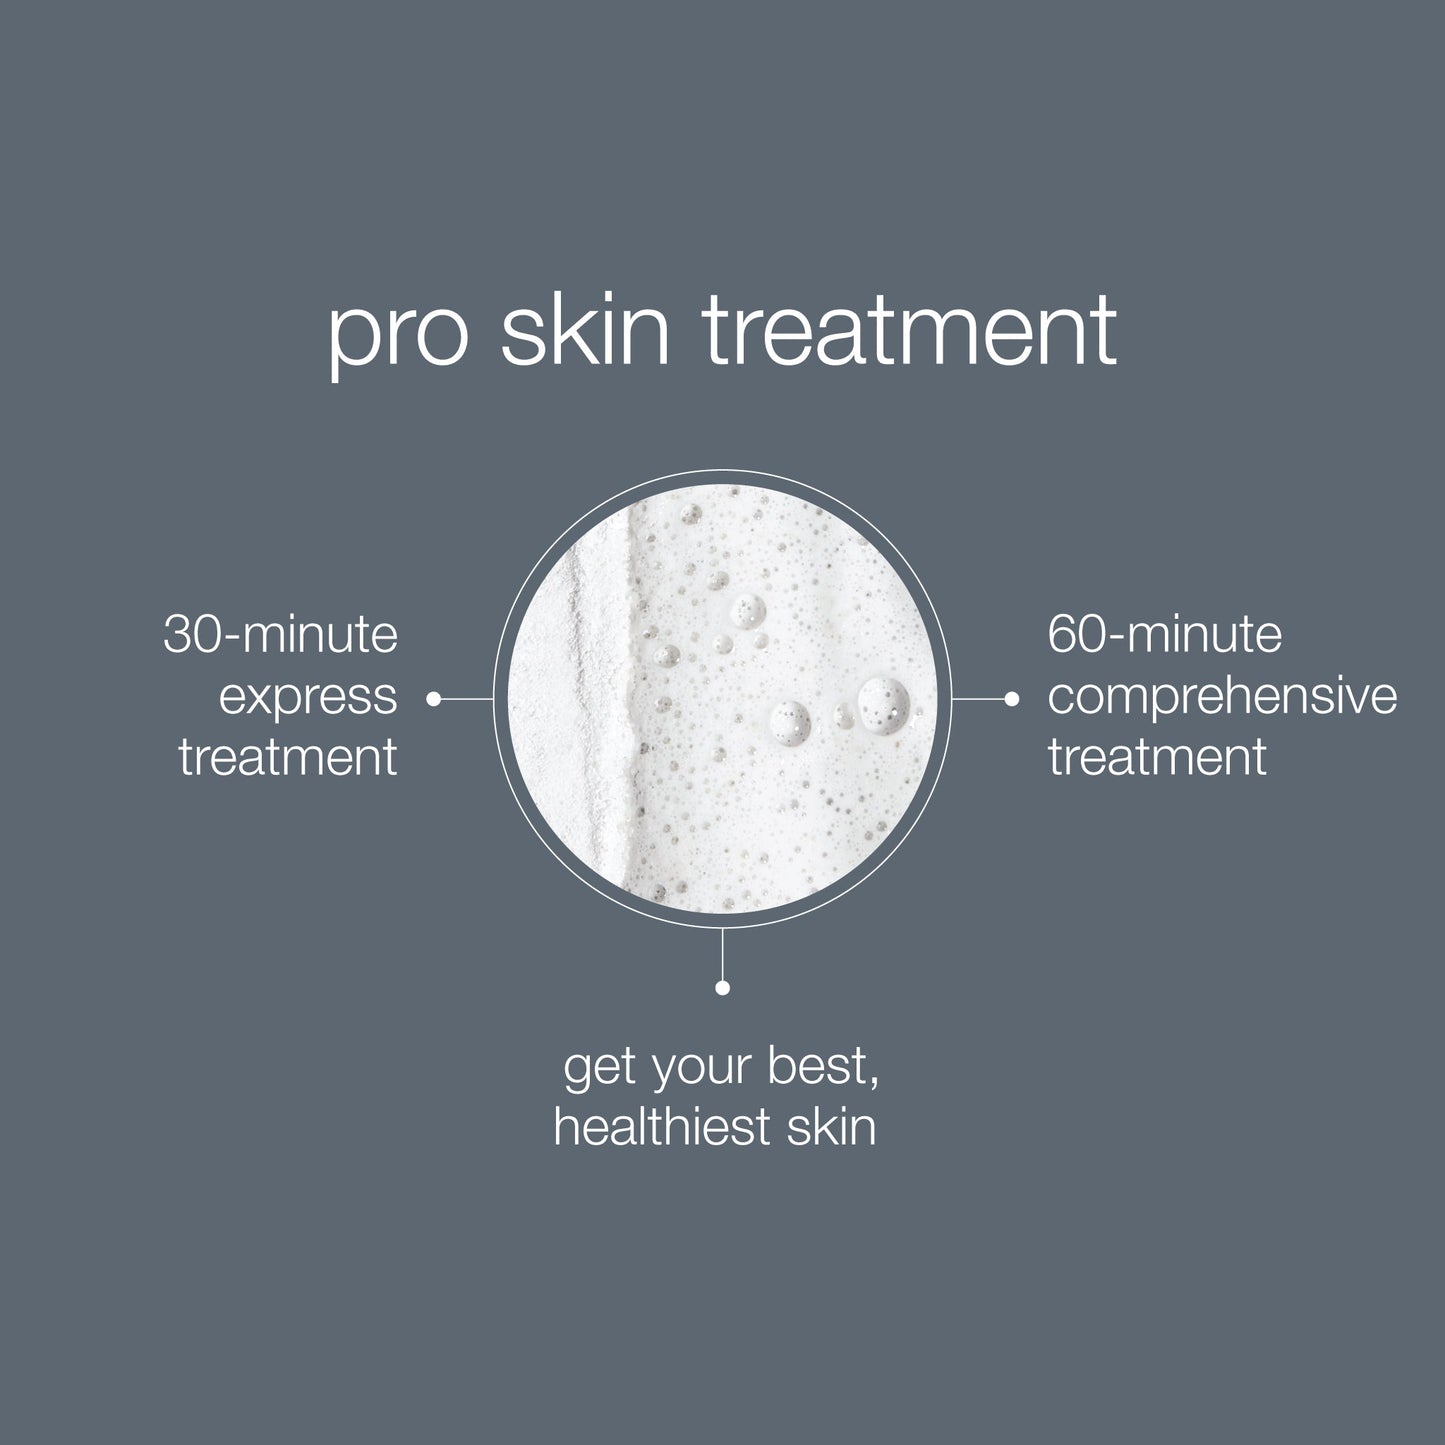 pro skin treatment benefits